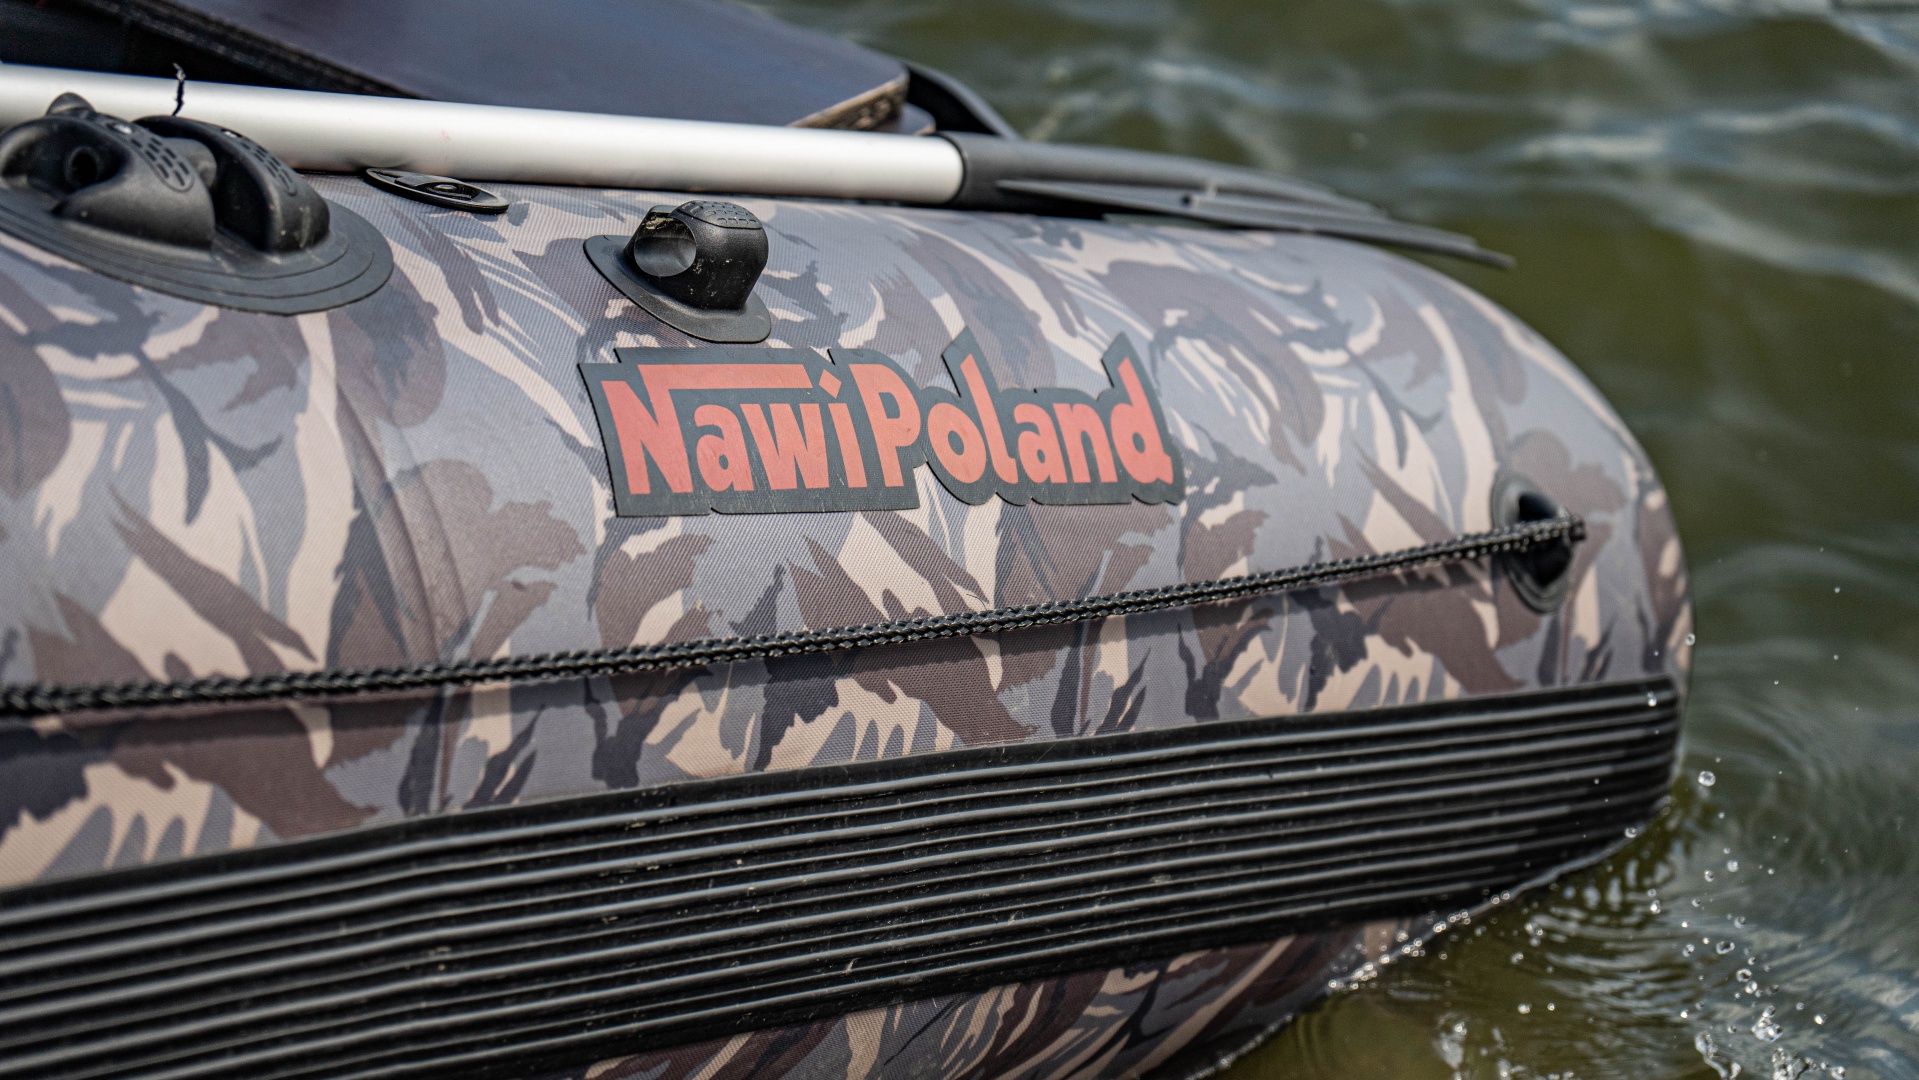 NawiPoland CAT 280 Inflatable Boat  - Katamarán